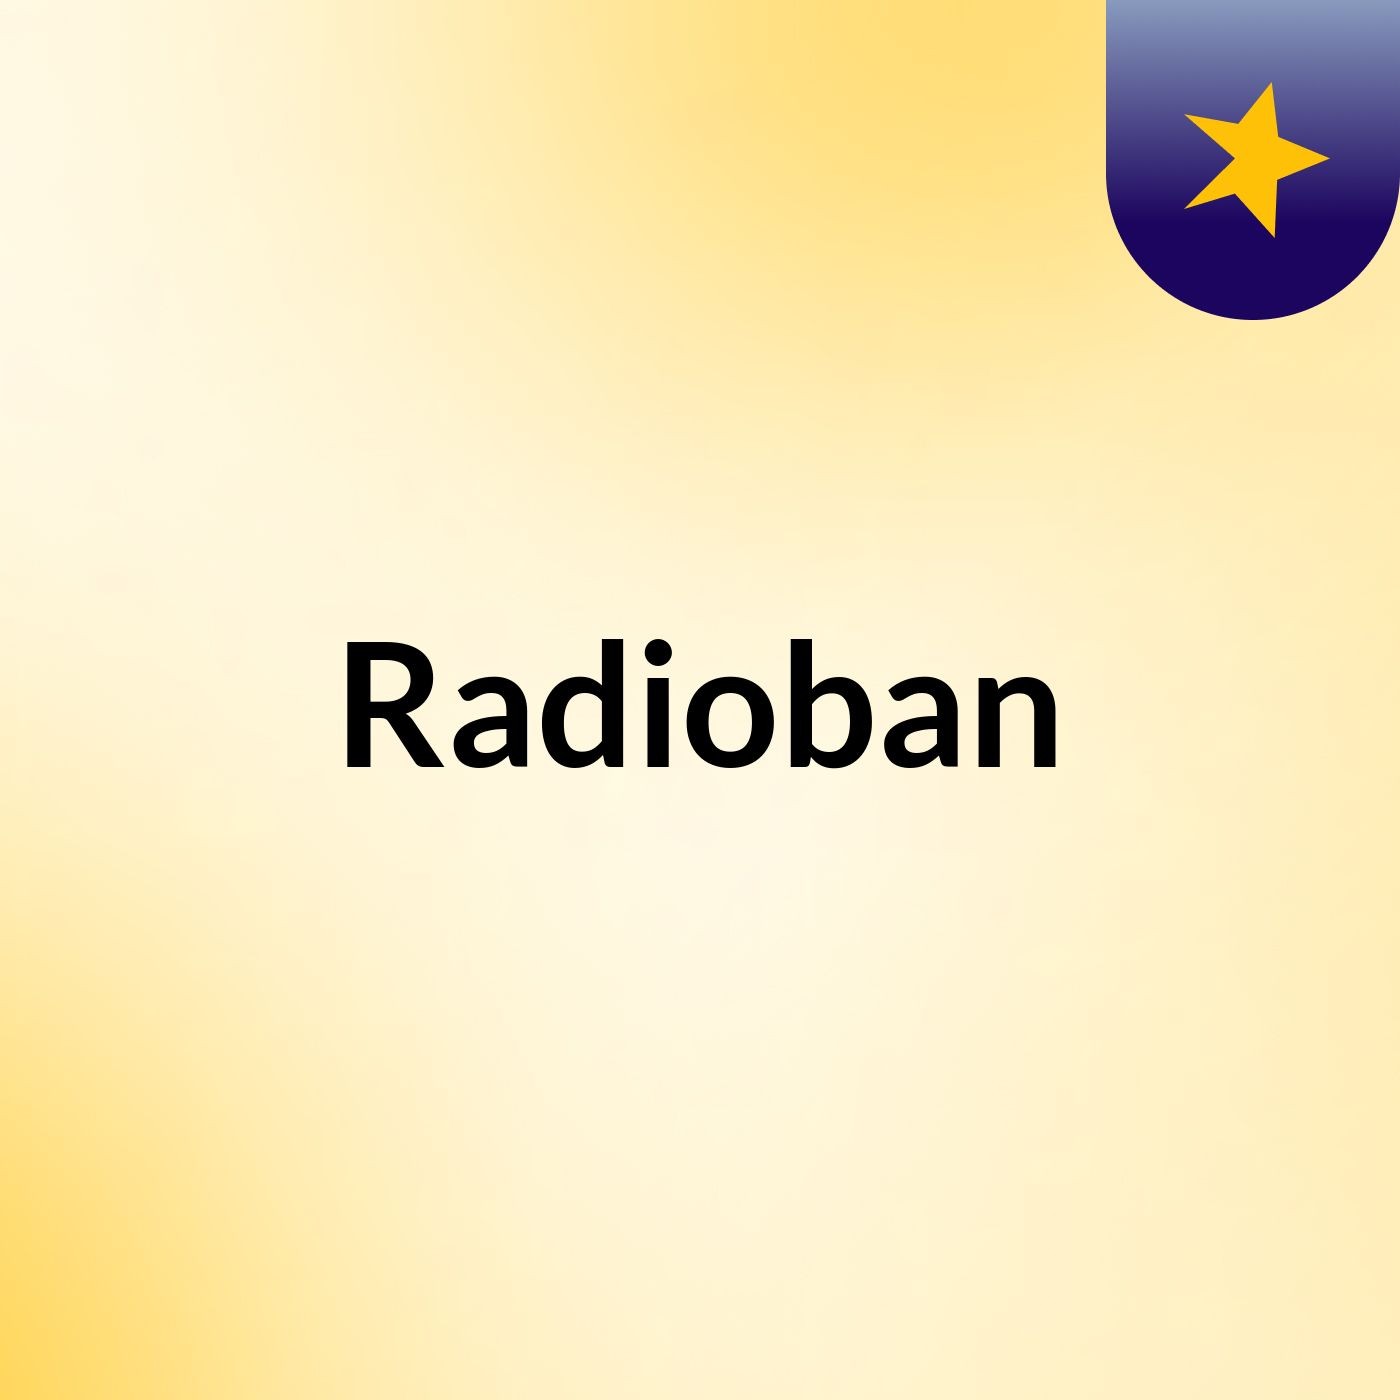 Radioban